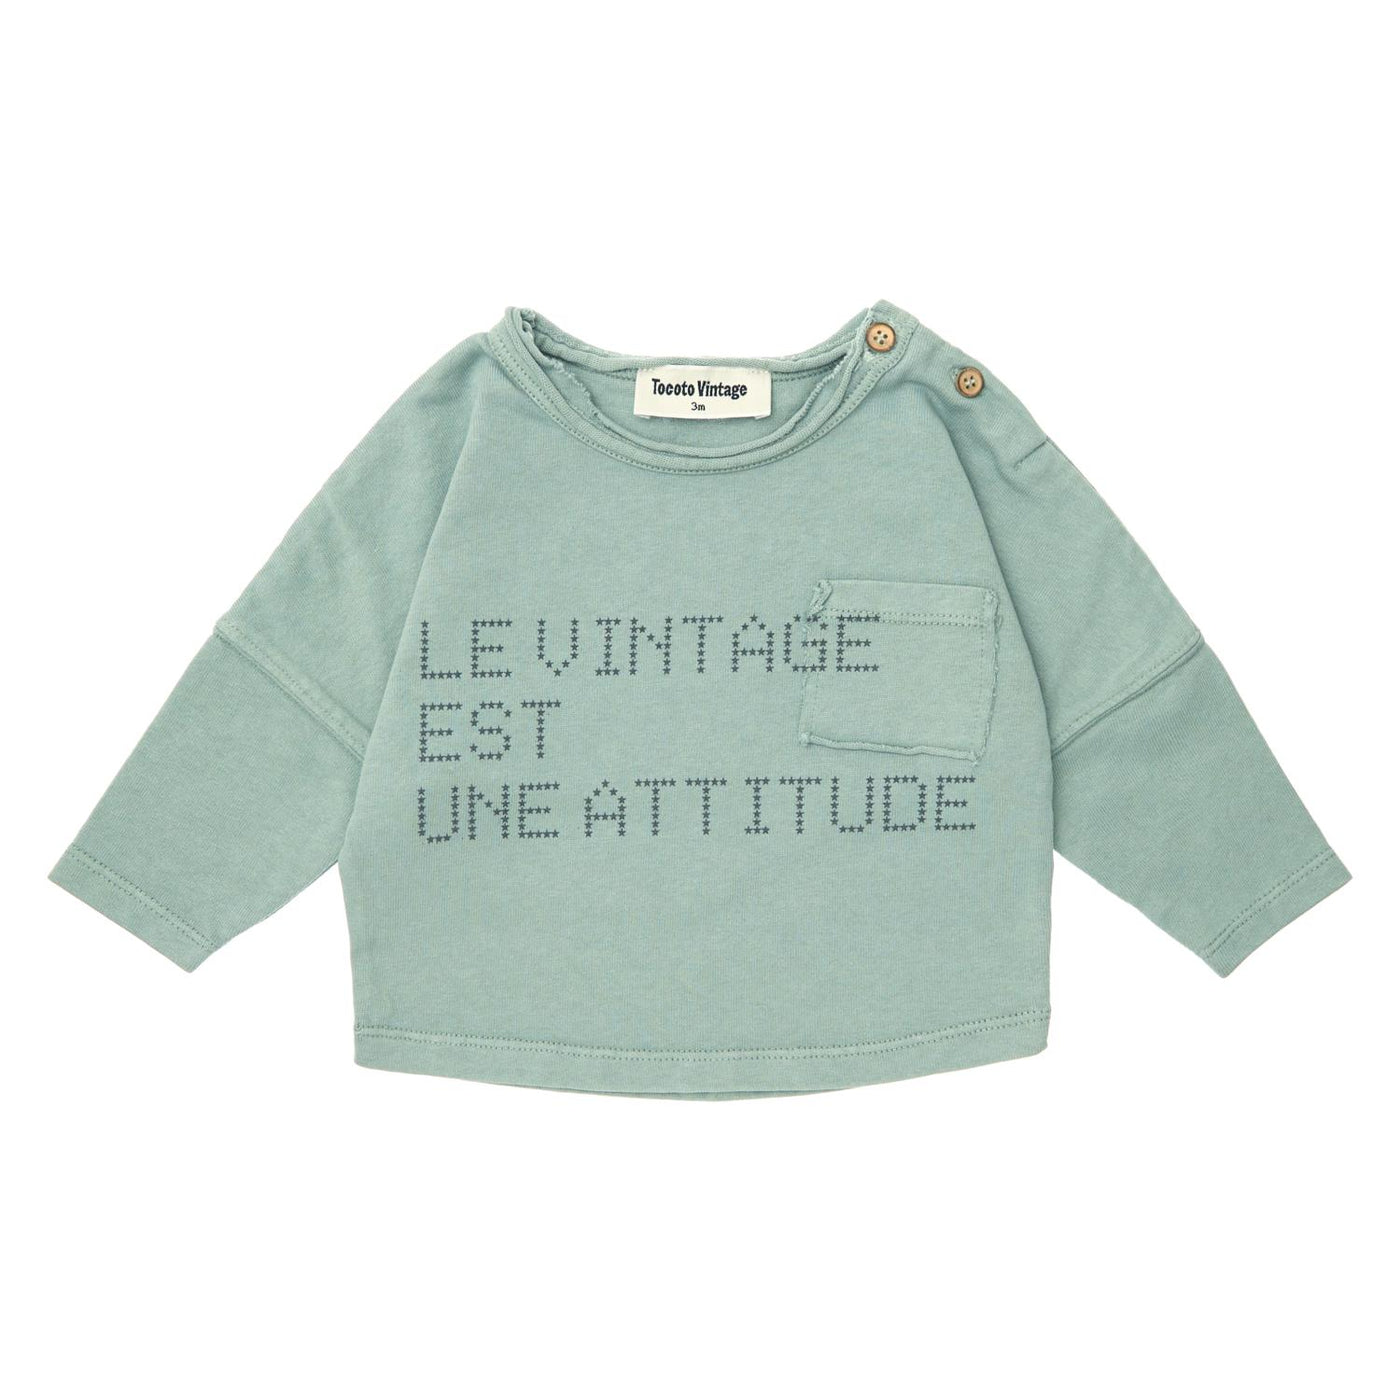 "Attitude" Baby T-Shirt